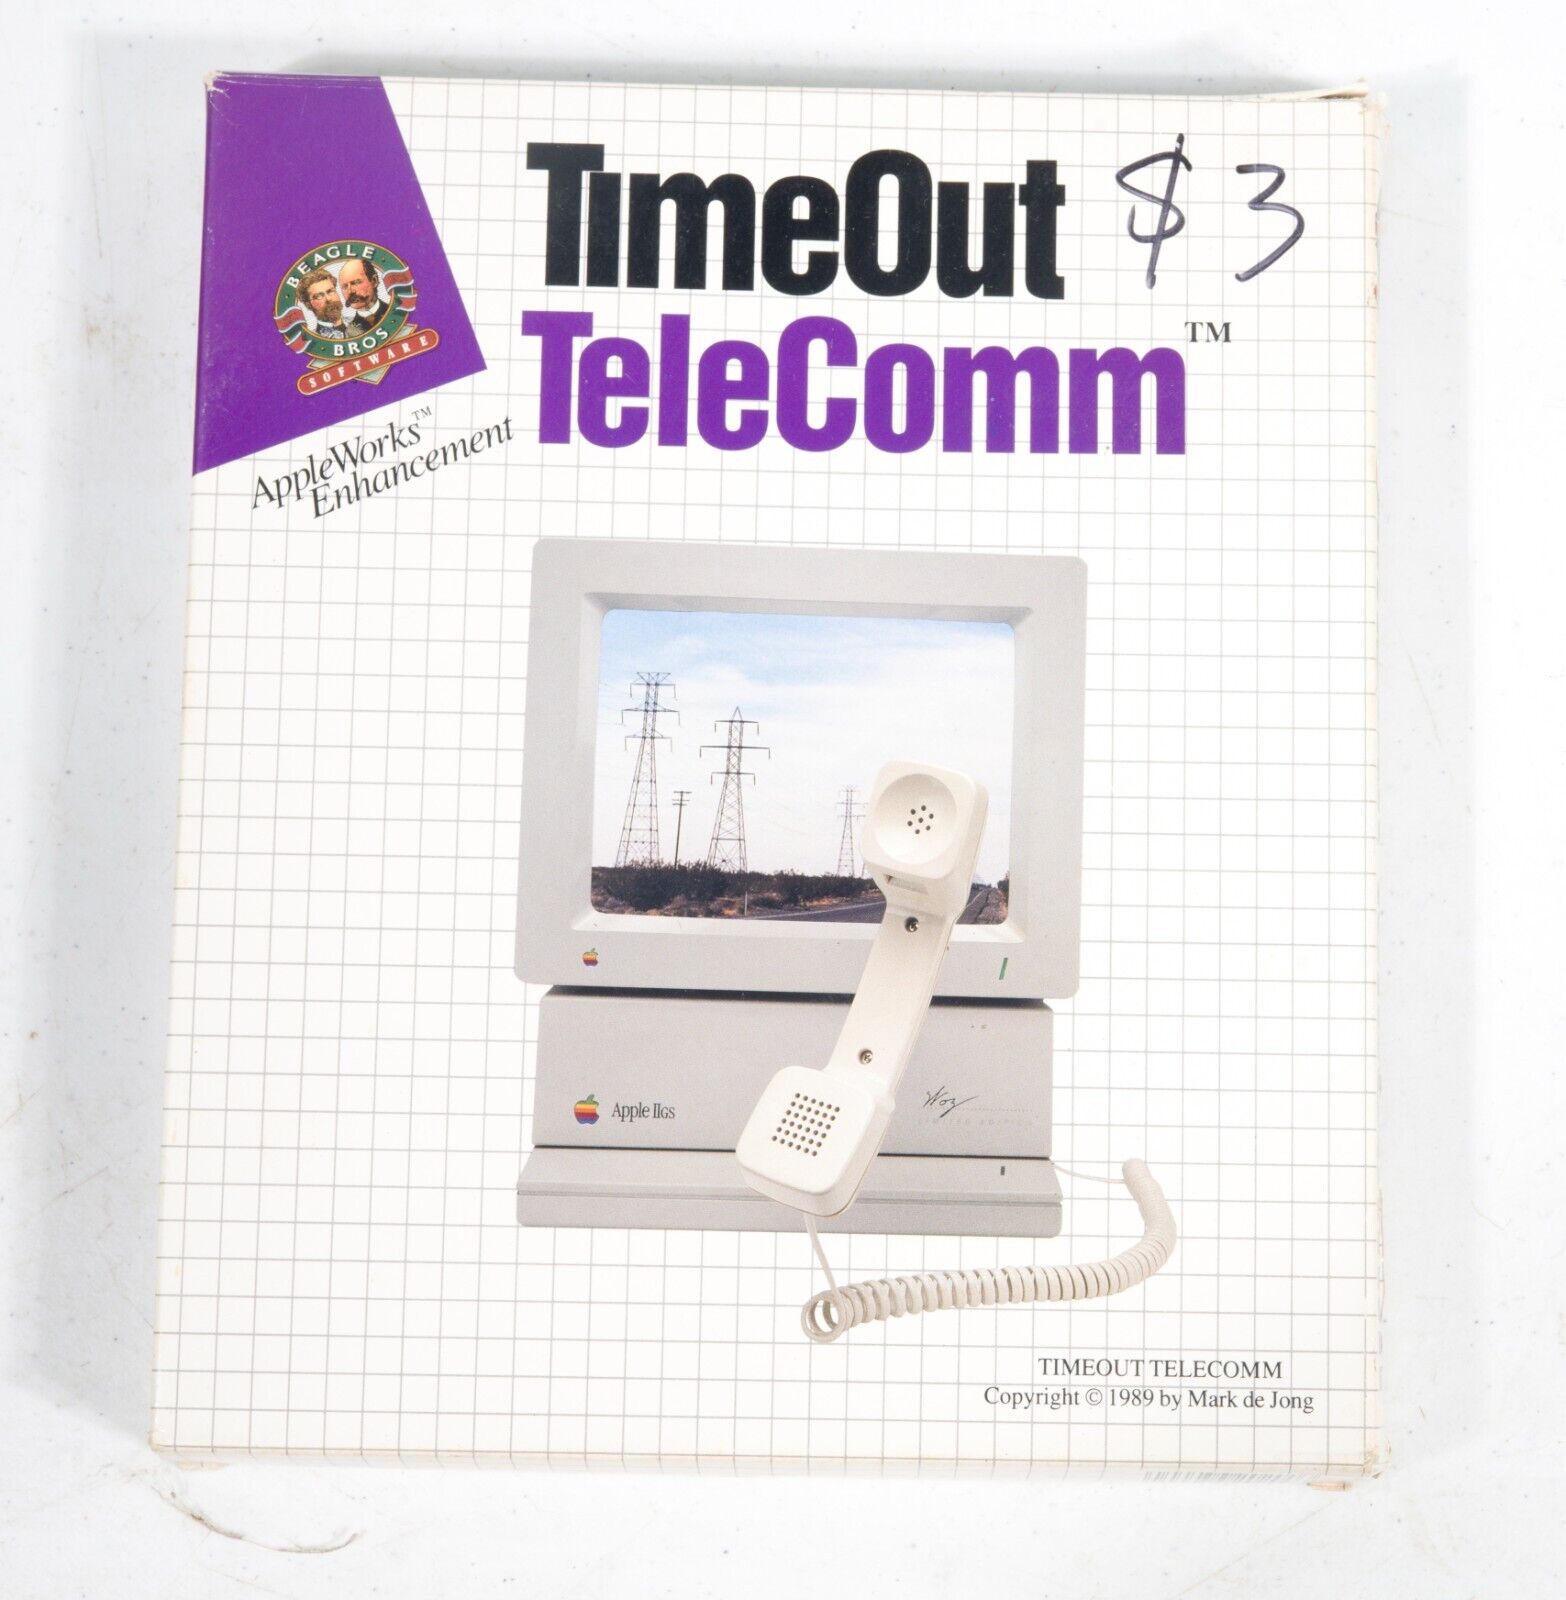 Vintage Beagle Bros Timeout Telecom Apple IIgs IIe IIc+  ST534B5